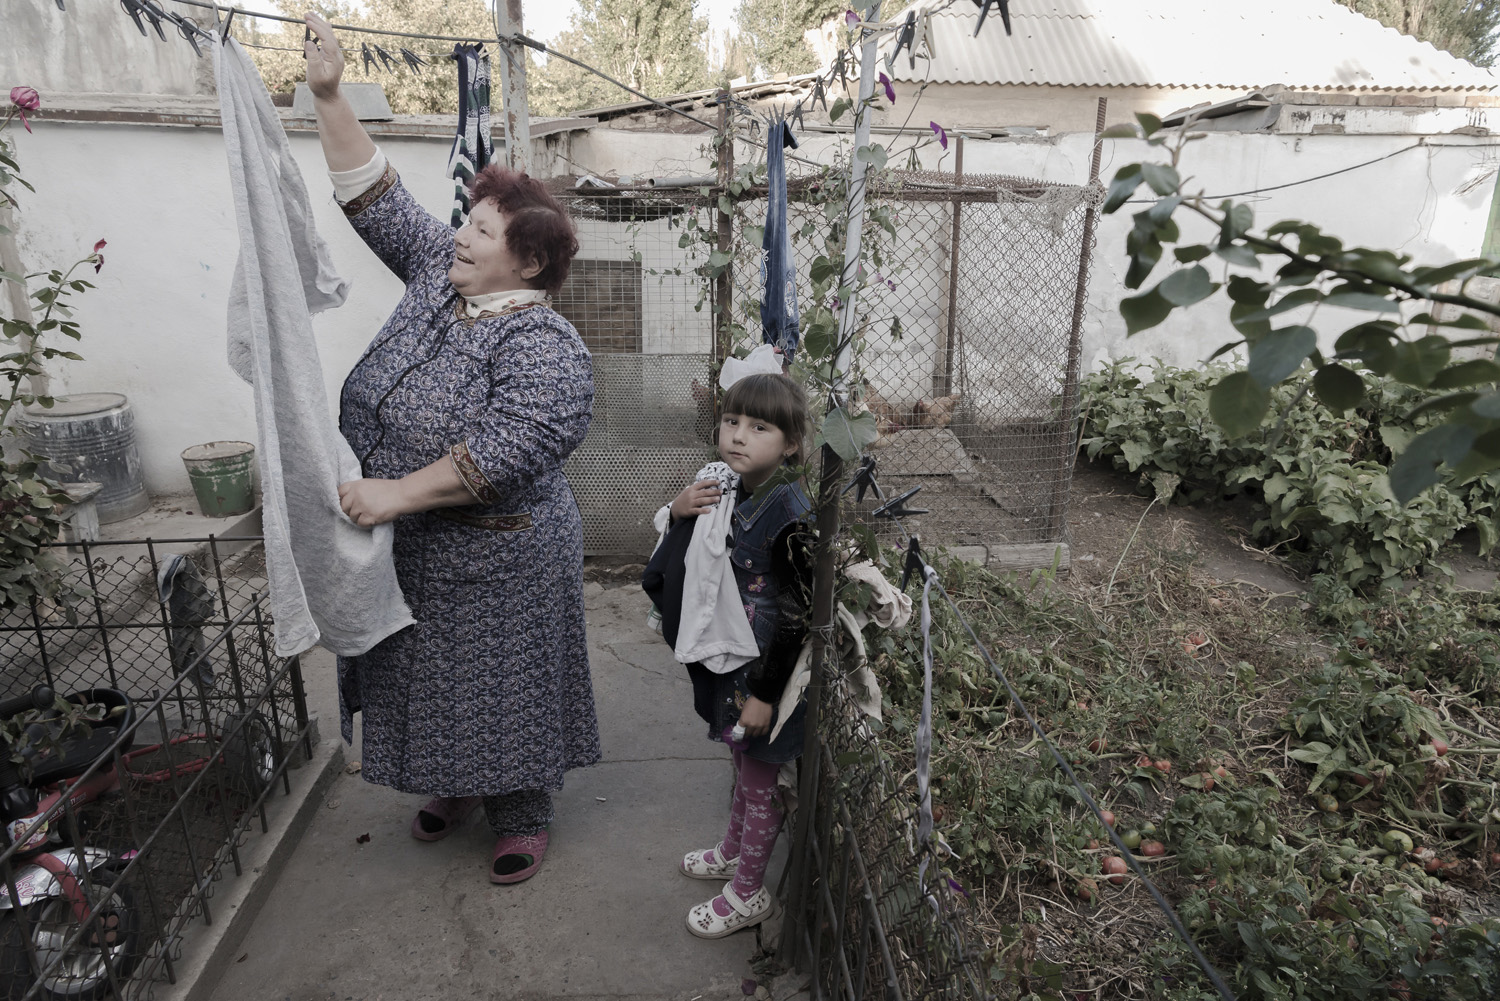 Soviet-Kyrgyzstan-home-elderly-jo-kearney-photography-video-grandparents-caring-soviet-kyrgyzstan-hanging-washing.jpg